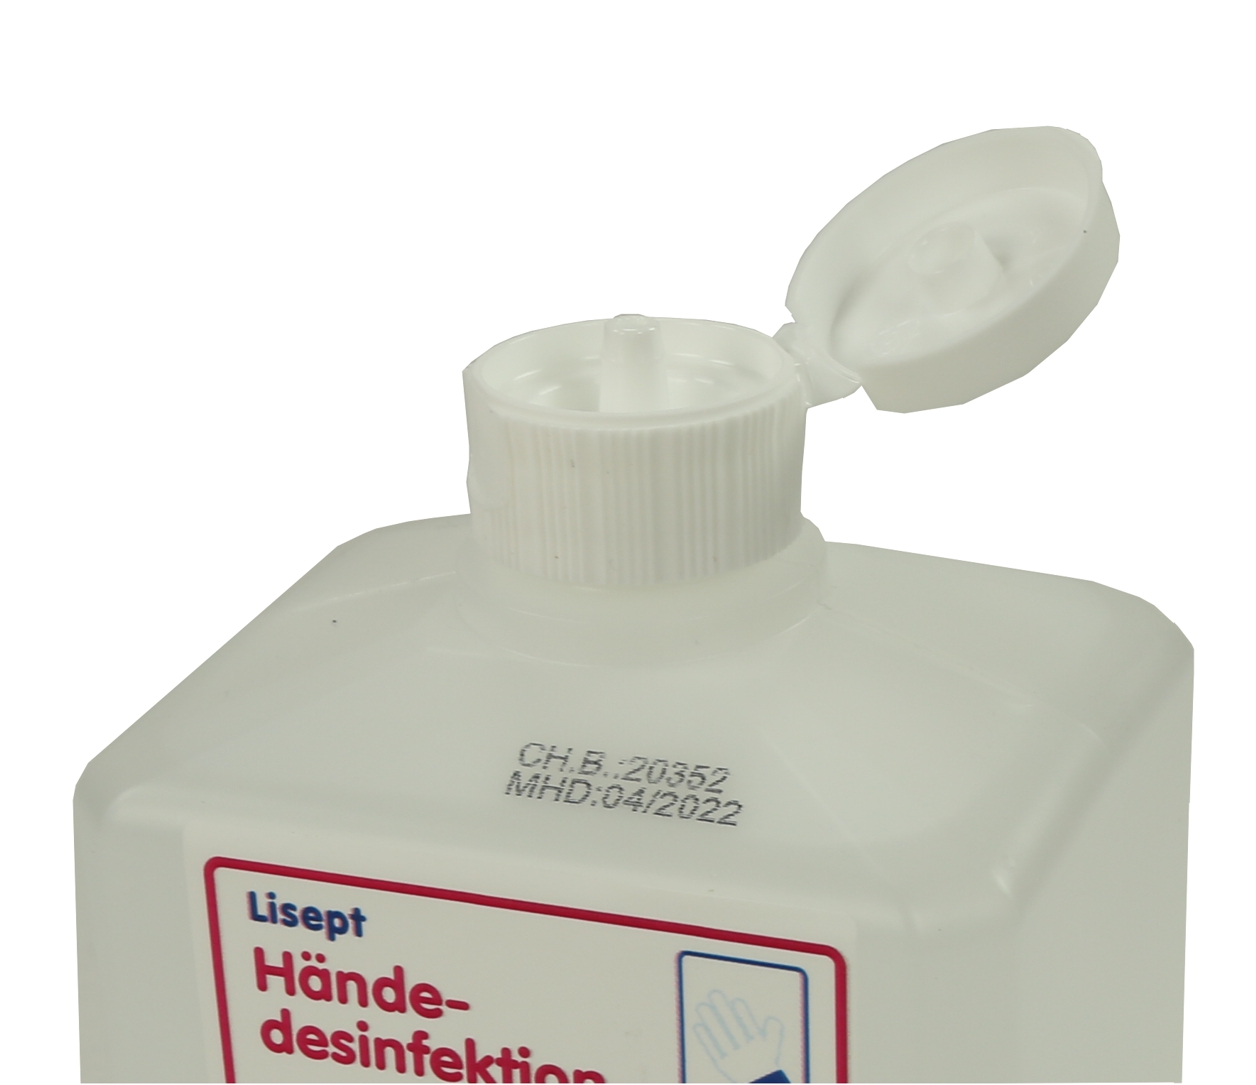 Lisept - Händedesinfektion 1 Liter - Sonderpreis